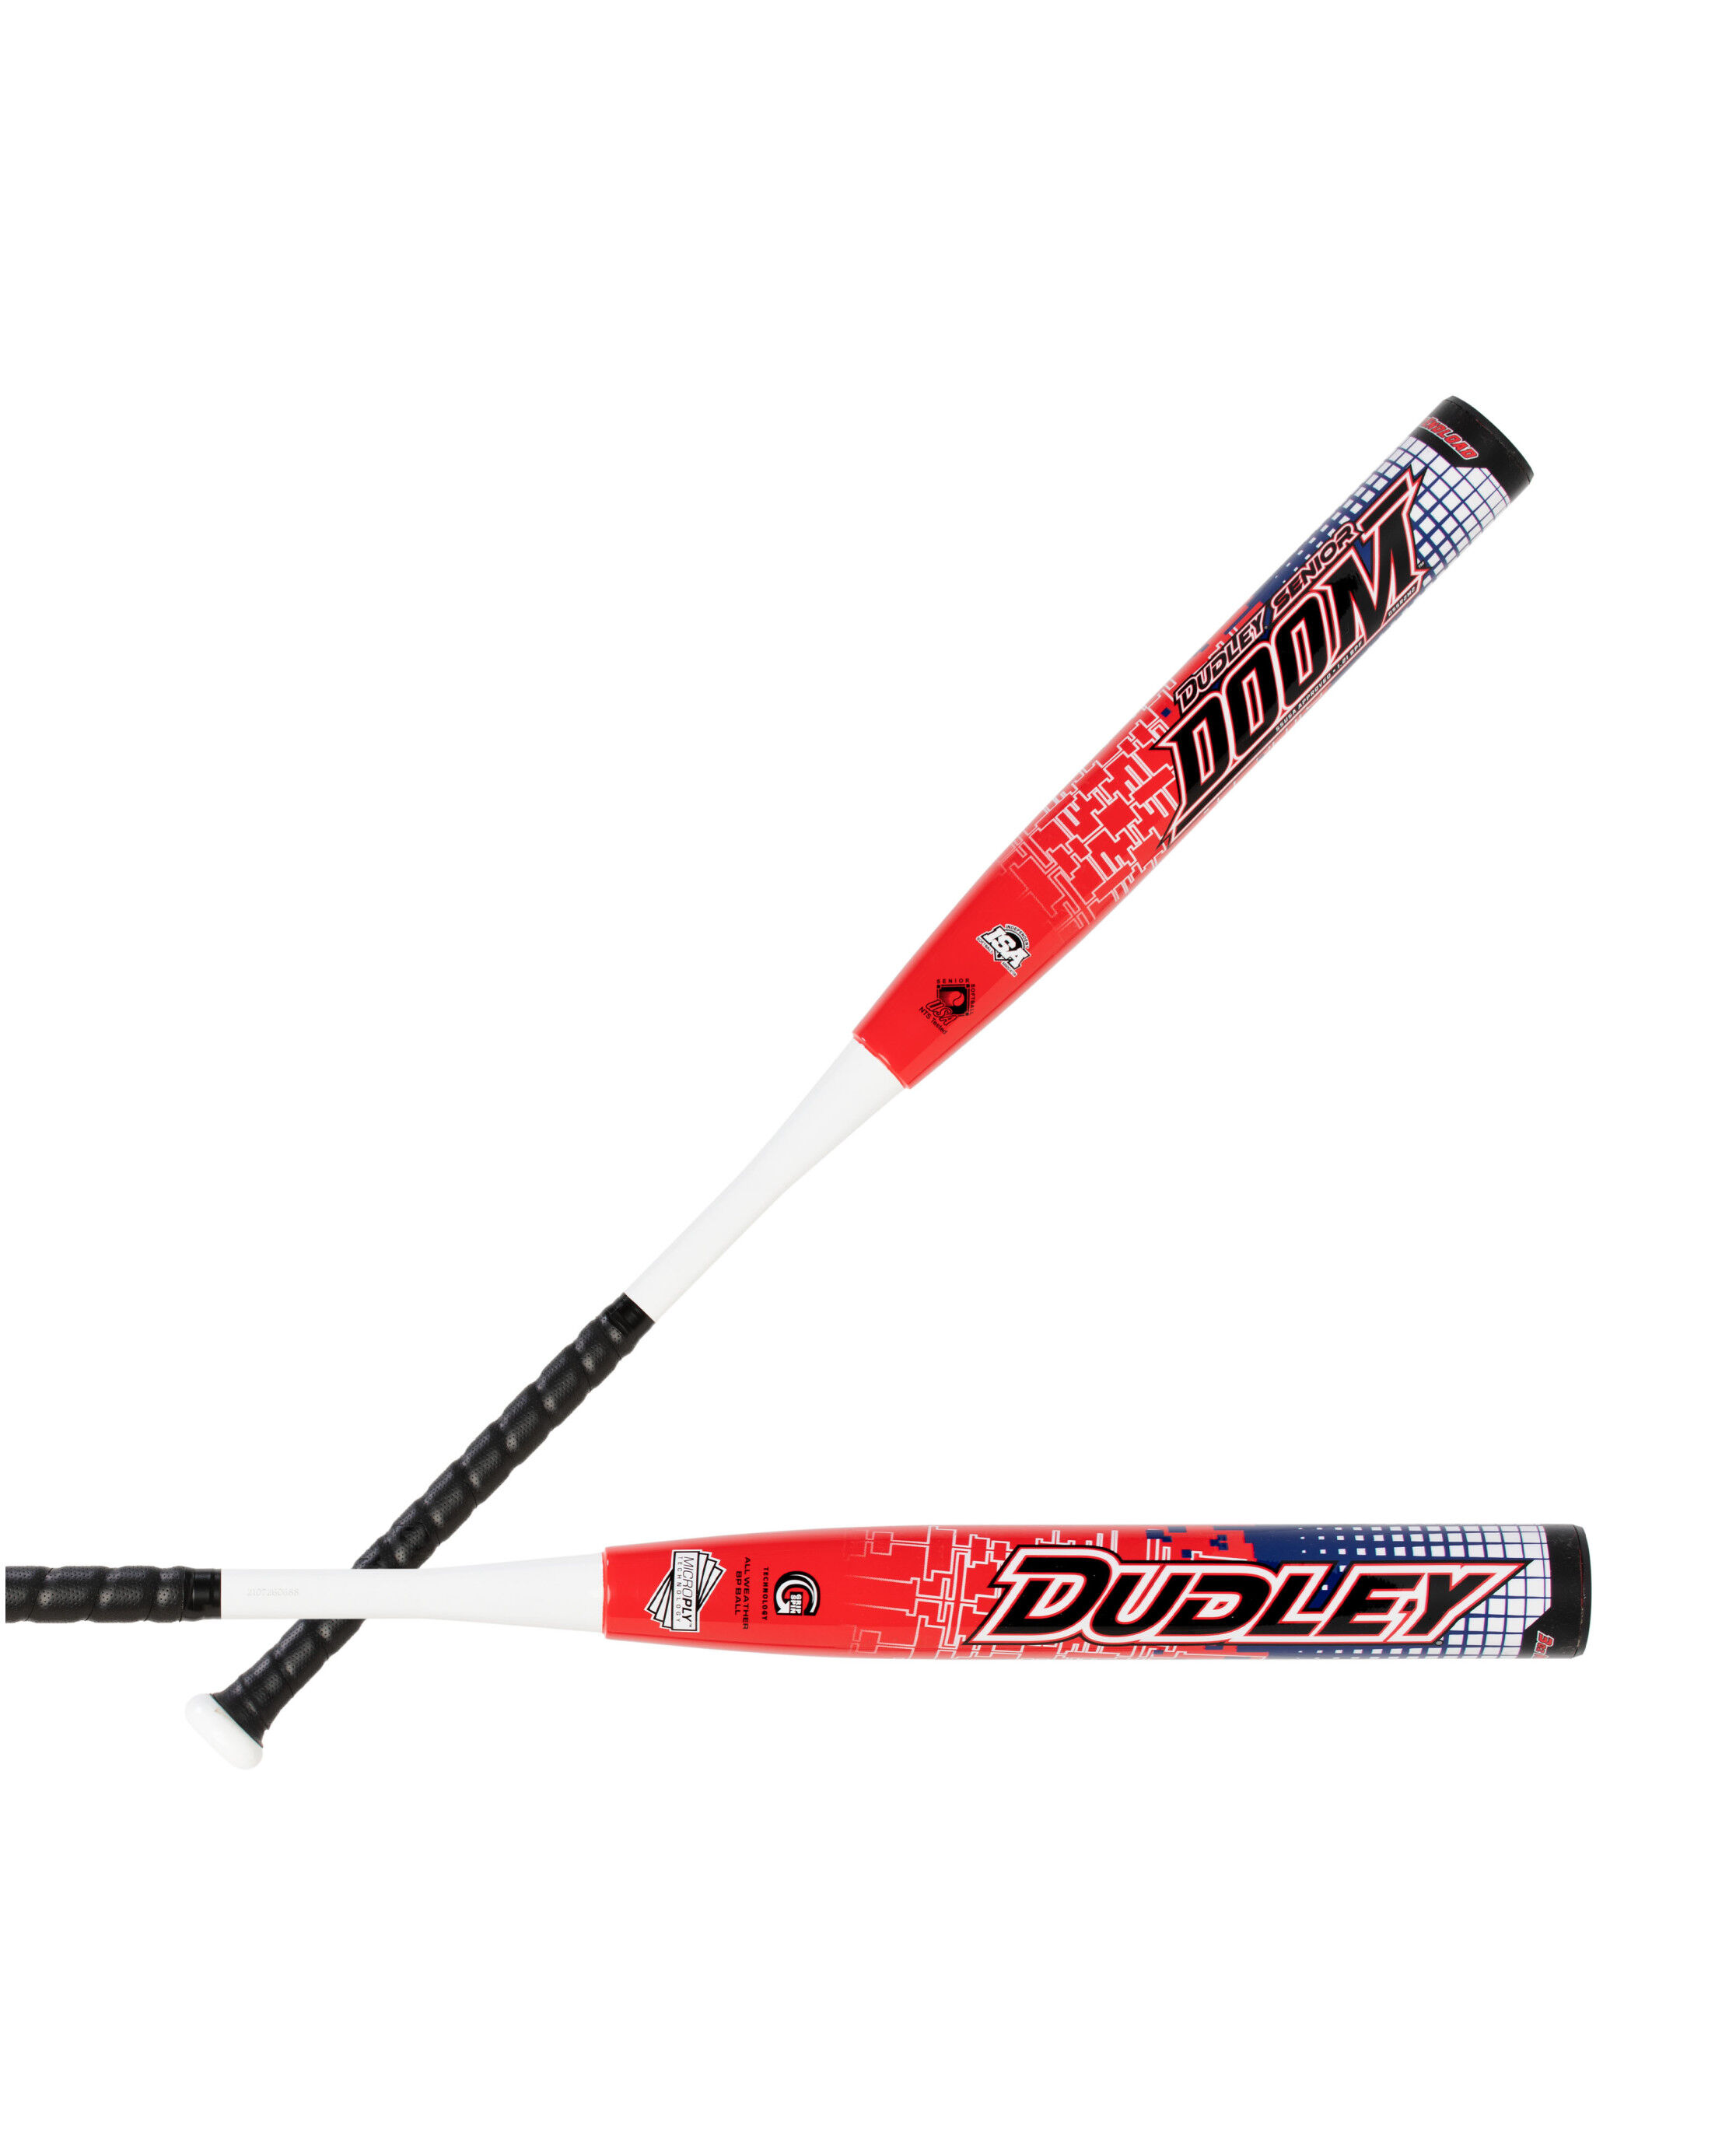 Dudley Bobby Nifong Softball Bat for sale online 